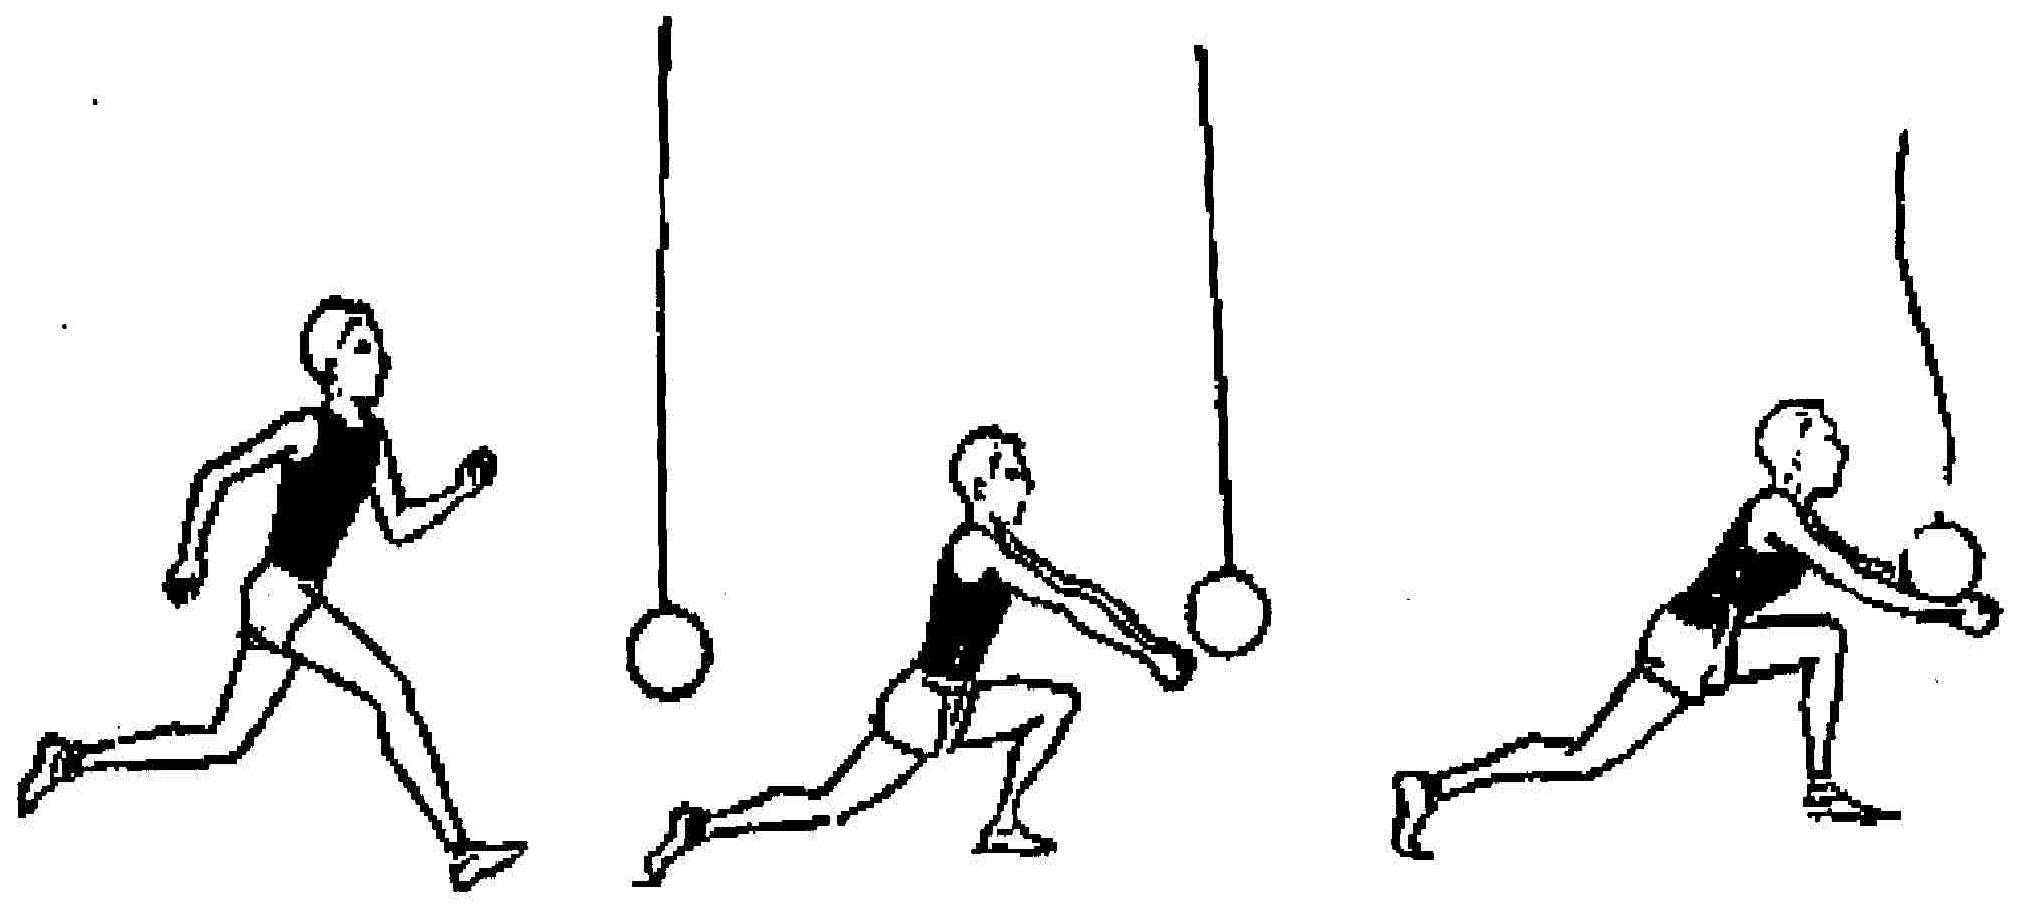 Броски снизу. Подводящие упражнения передачи мяча снизу волейбол. Подводящие упражнения мяча снизу. Подводящие упражнения для нижней передачи мяча в волейболе. Подводящие упражнения приема мяча снизу двумя руками.